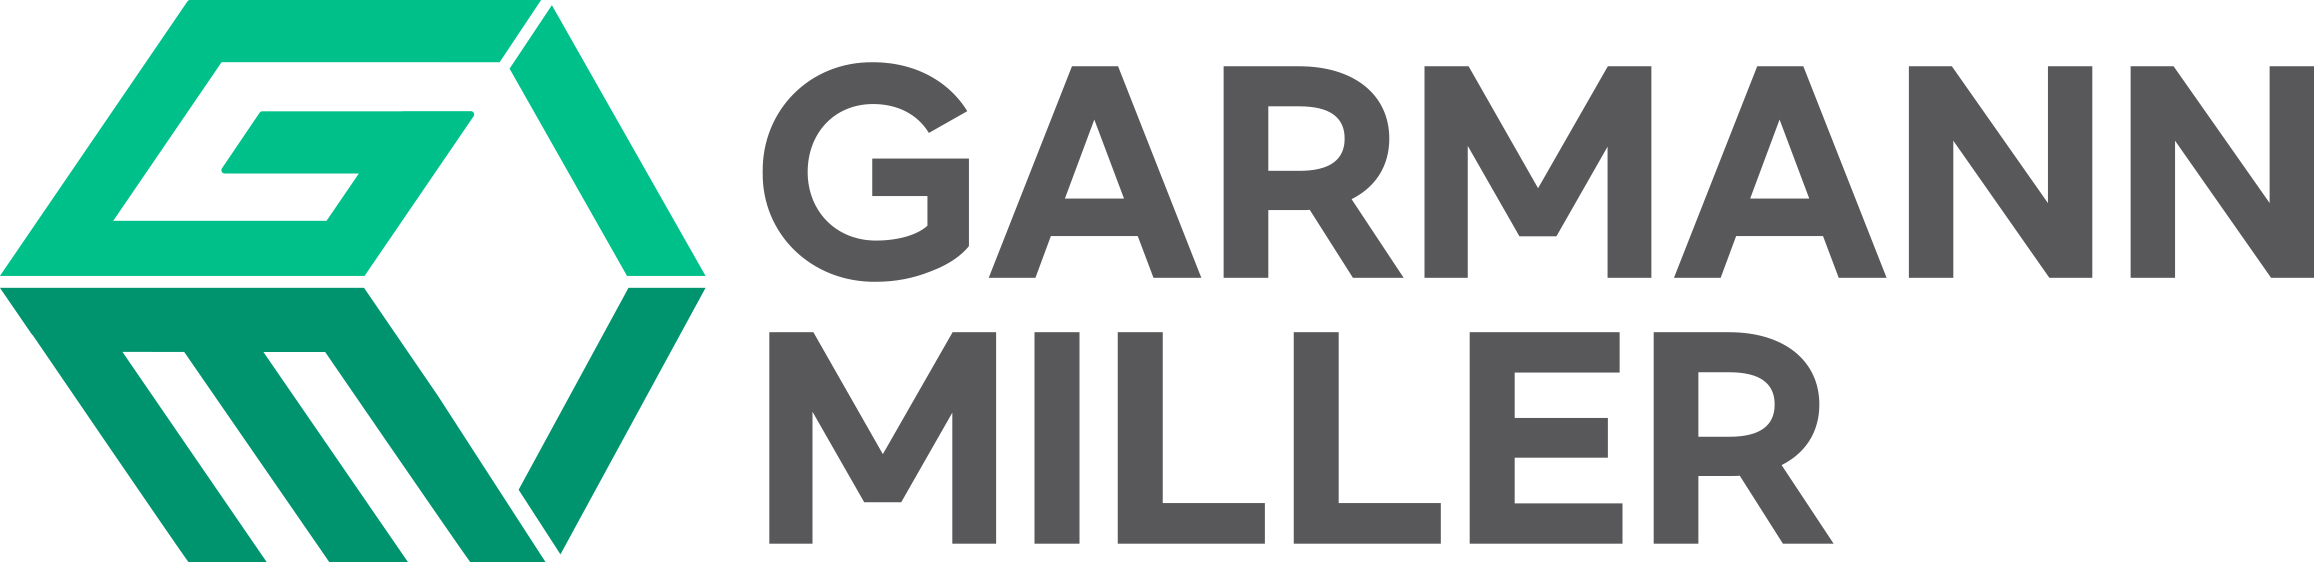 Garmann Miller logo